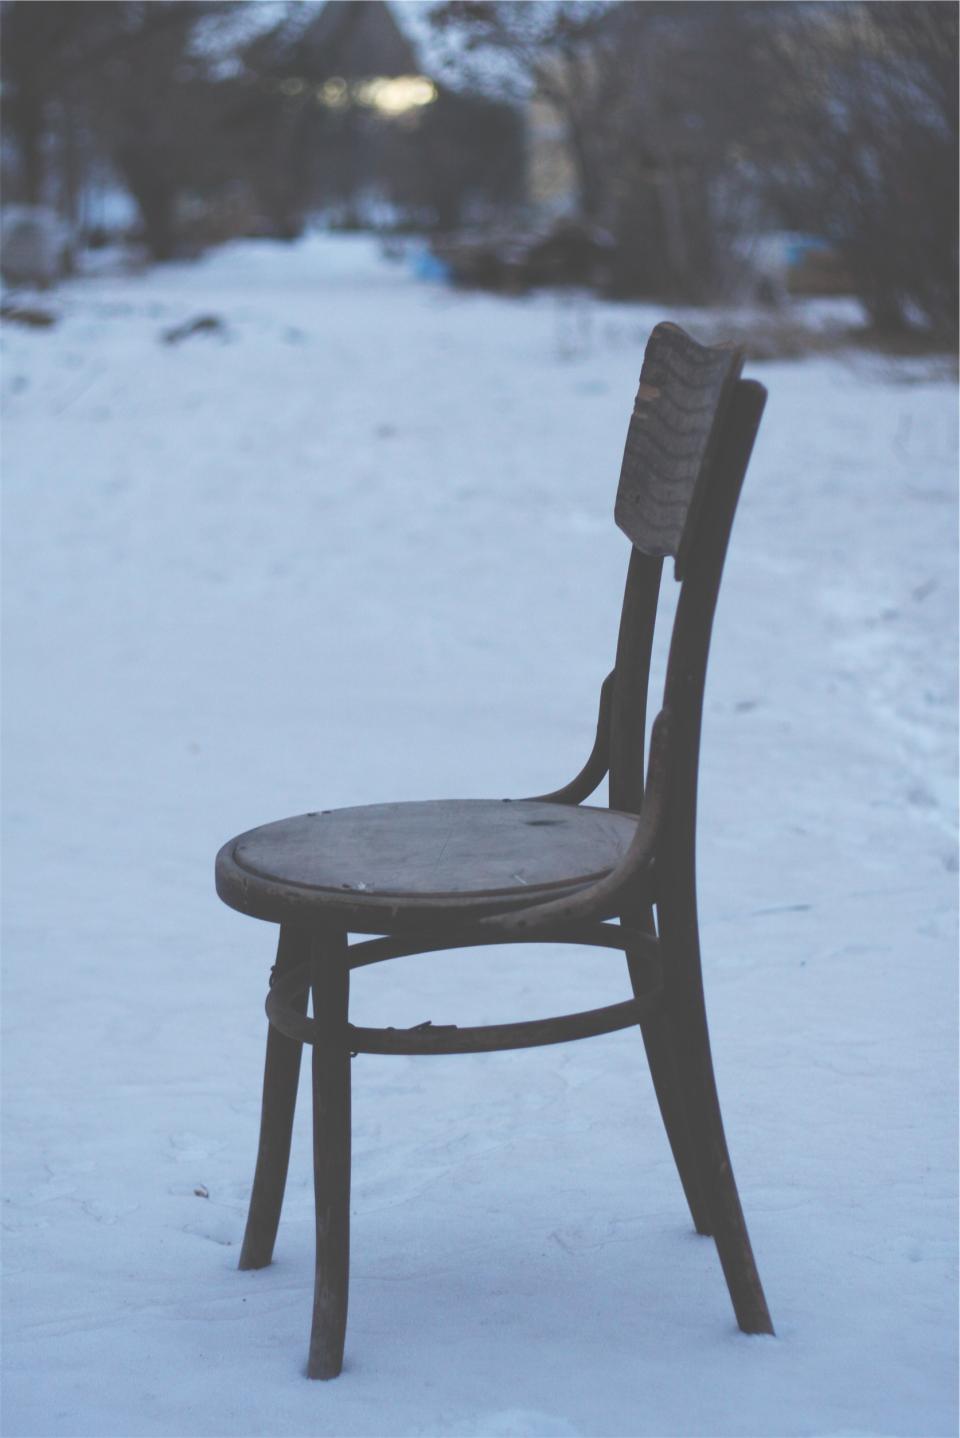 winter snow chair 